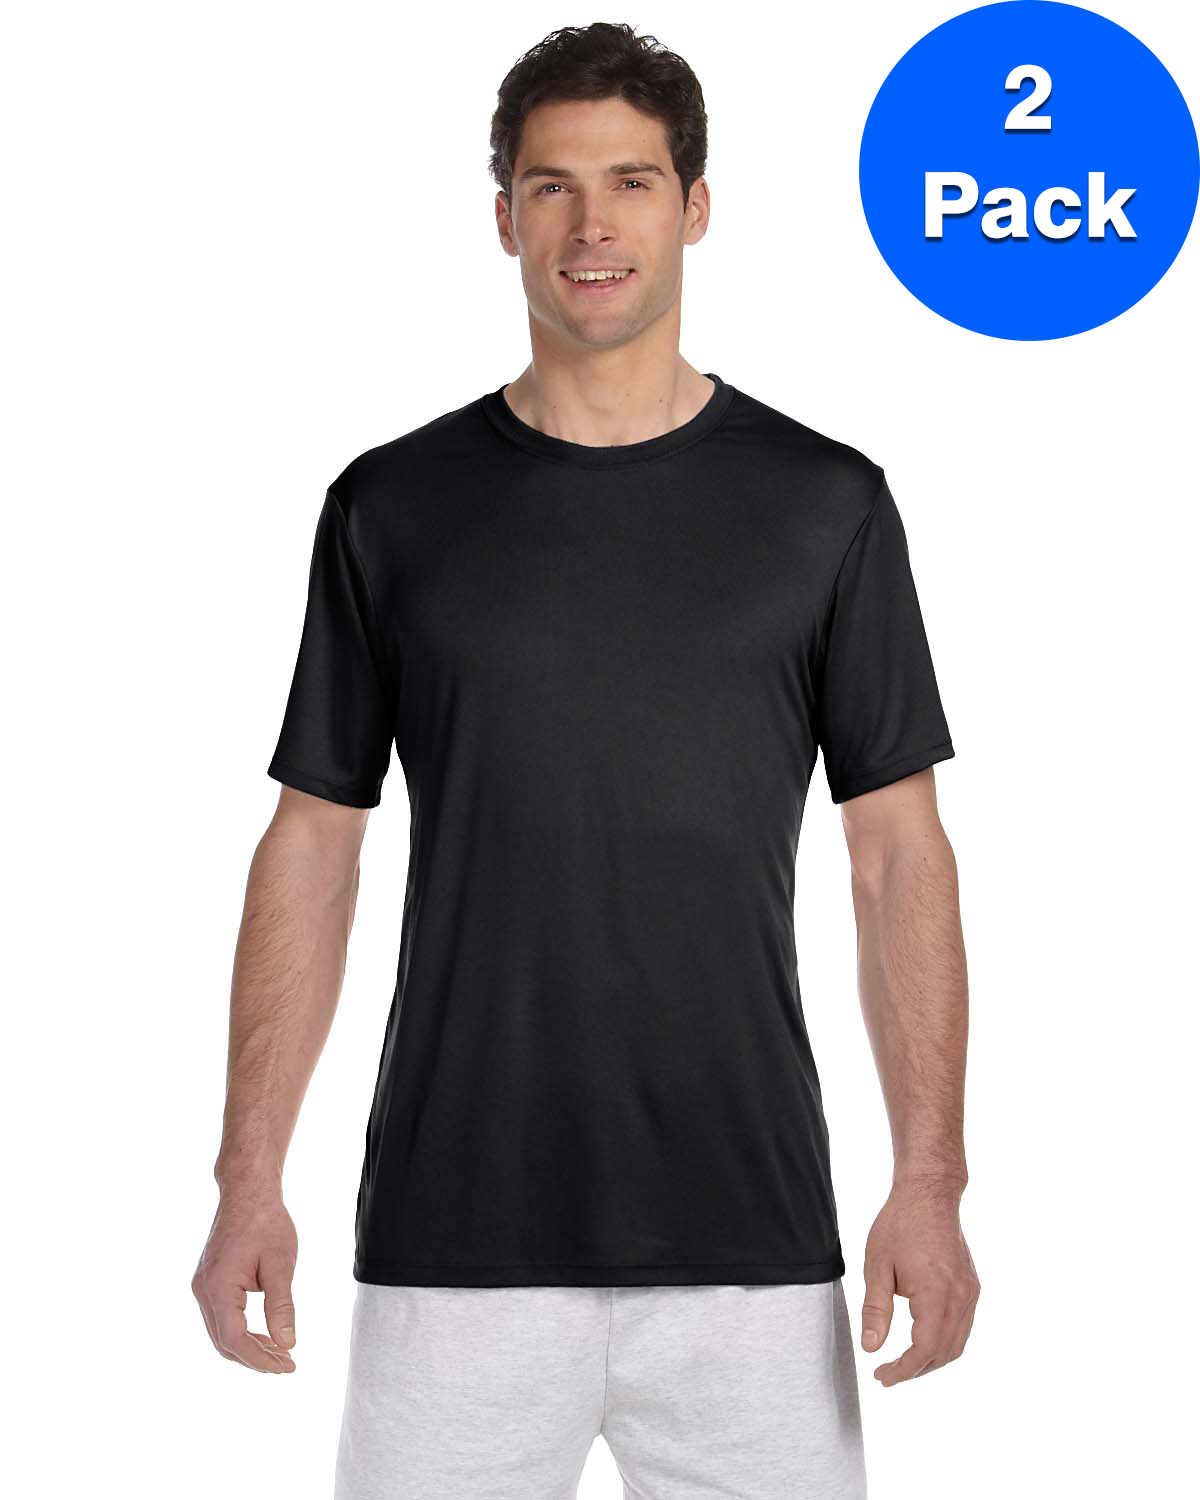 Mens Cool DRI TAGLESS Men's T-Shirt 4820 (2 PACK) - image 1 of 3